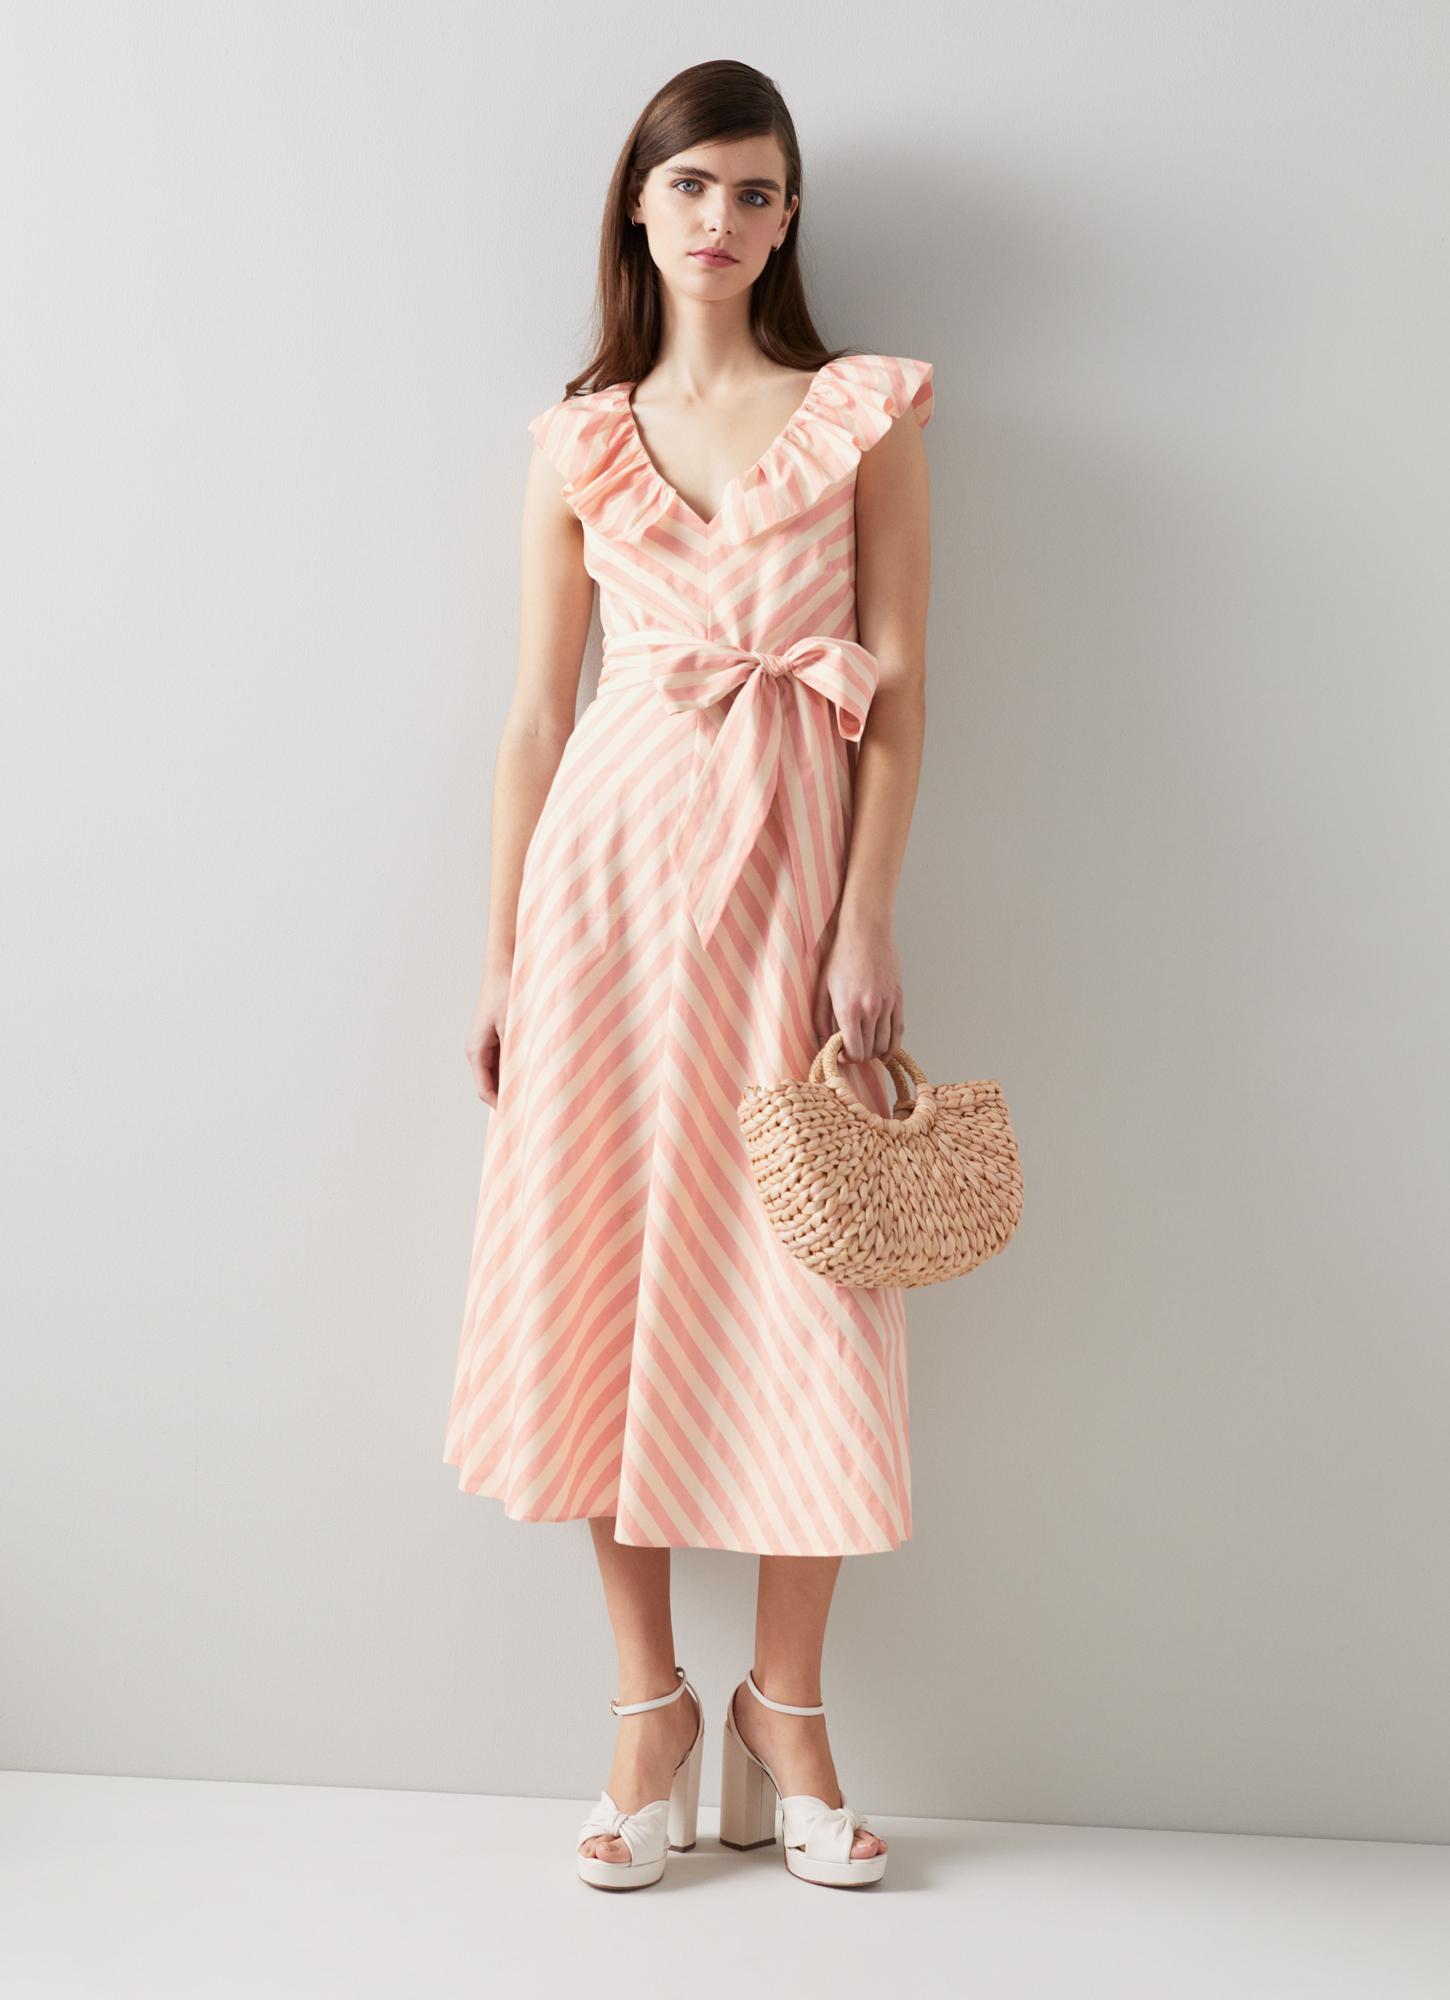 L.K.Bennett Shenyu Pink and White Cotton Candy Stripe Dress, Striped Dress